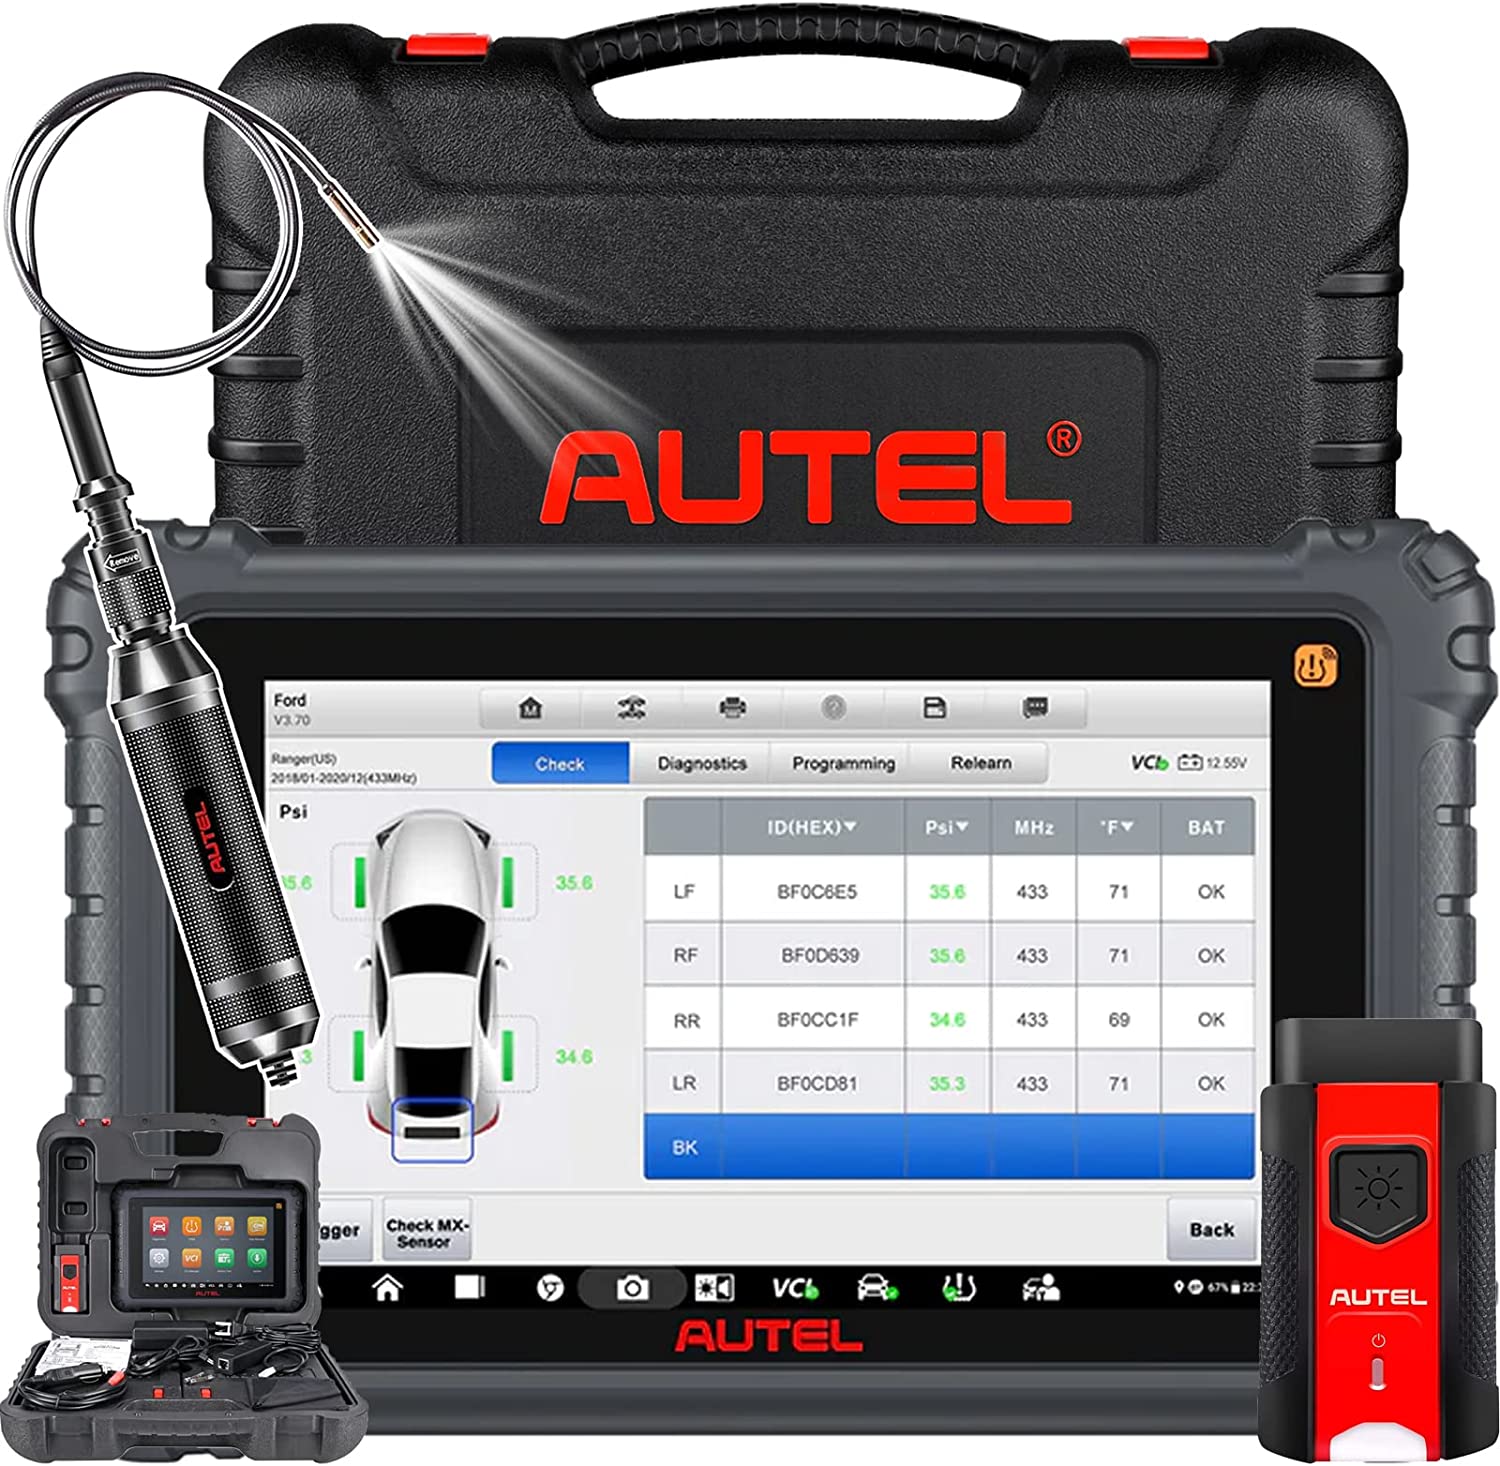 Autel MaxiCOM MK906 Pro Smart Wireless 128GB Advanced ECU Coding Automative Dignostic Scan Tablet Tool for Vehicles